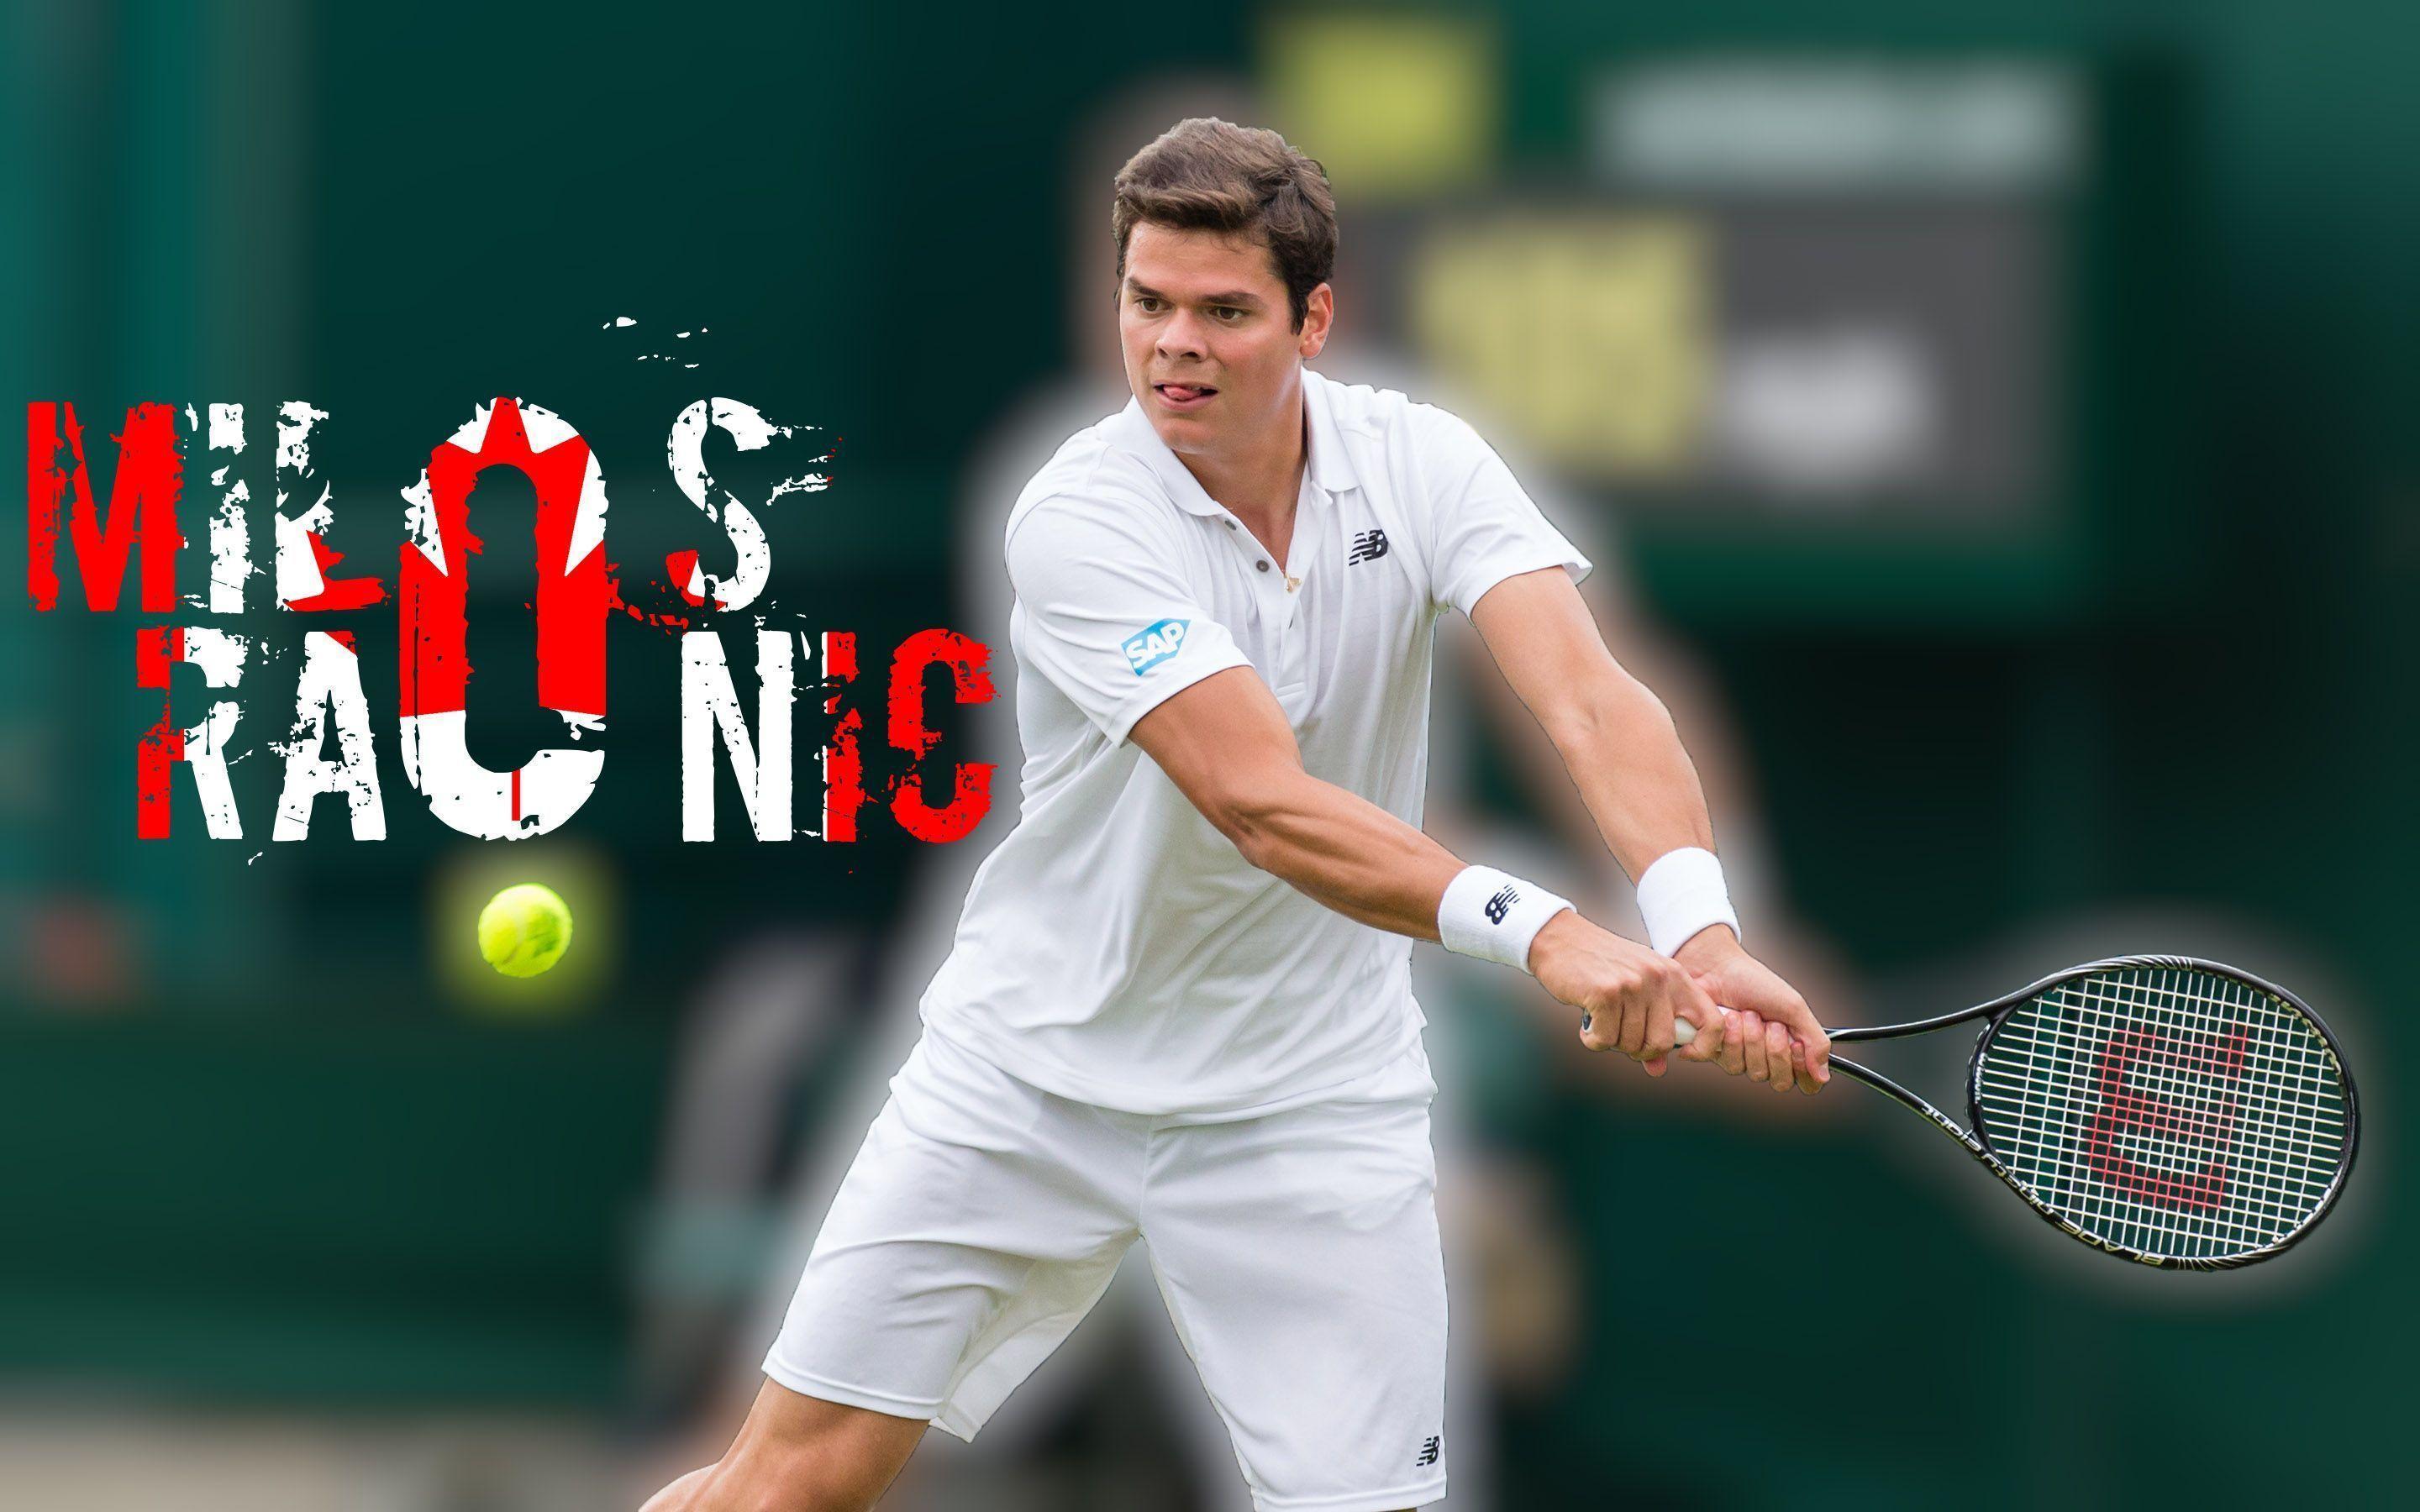 Milos Raonic 2014 Wimbledon Wallpapers Wide or HD